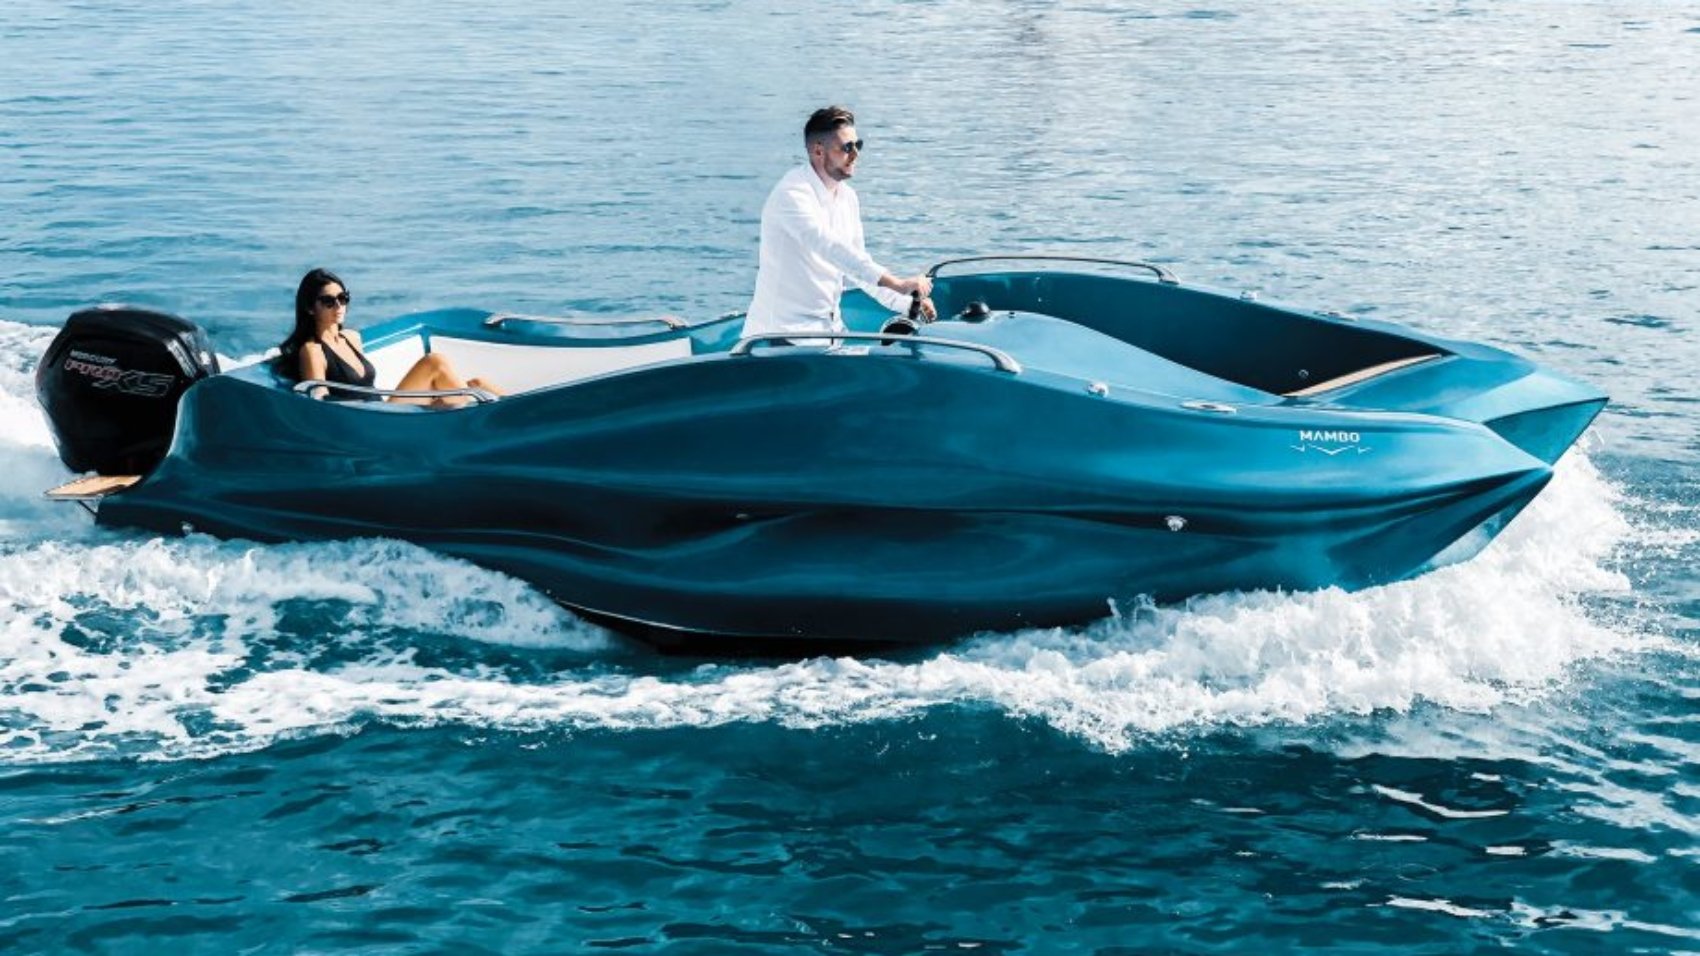 3d-printed-boats-mambo-prototype-hero-920x533